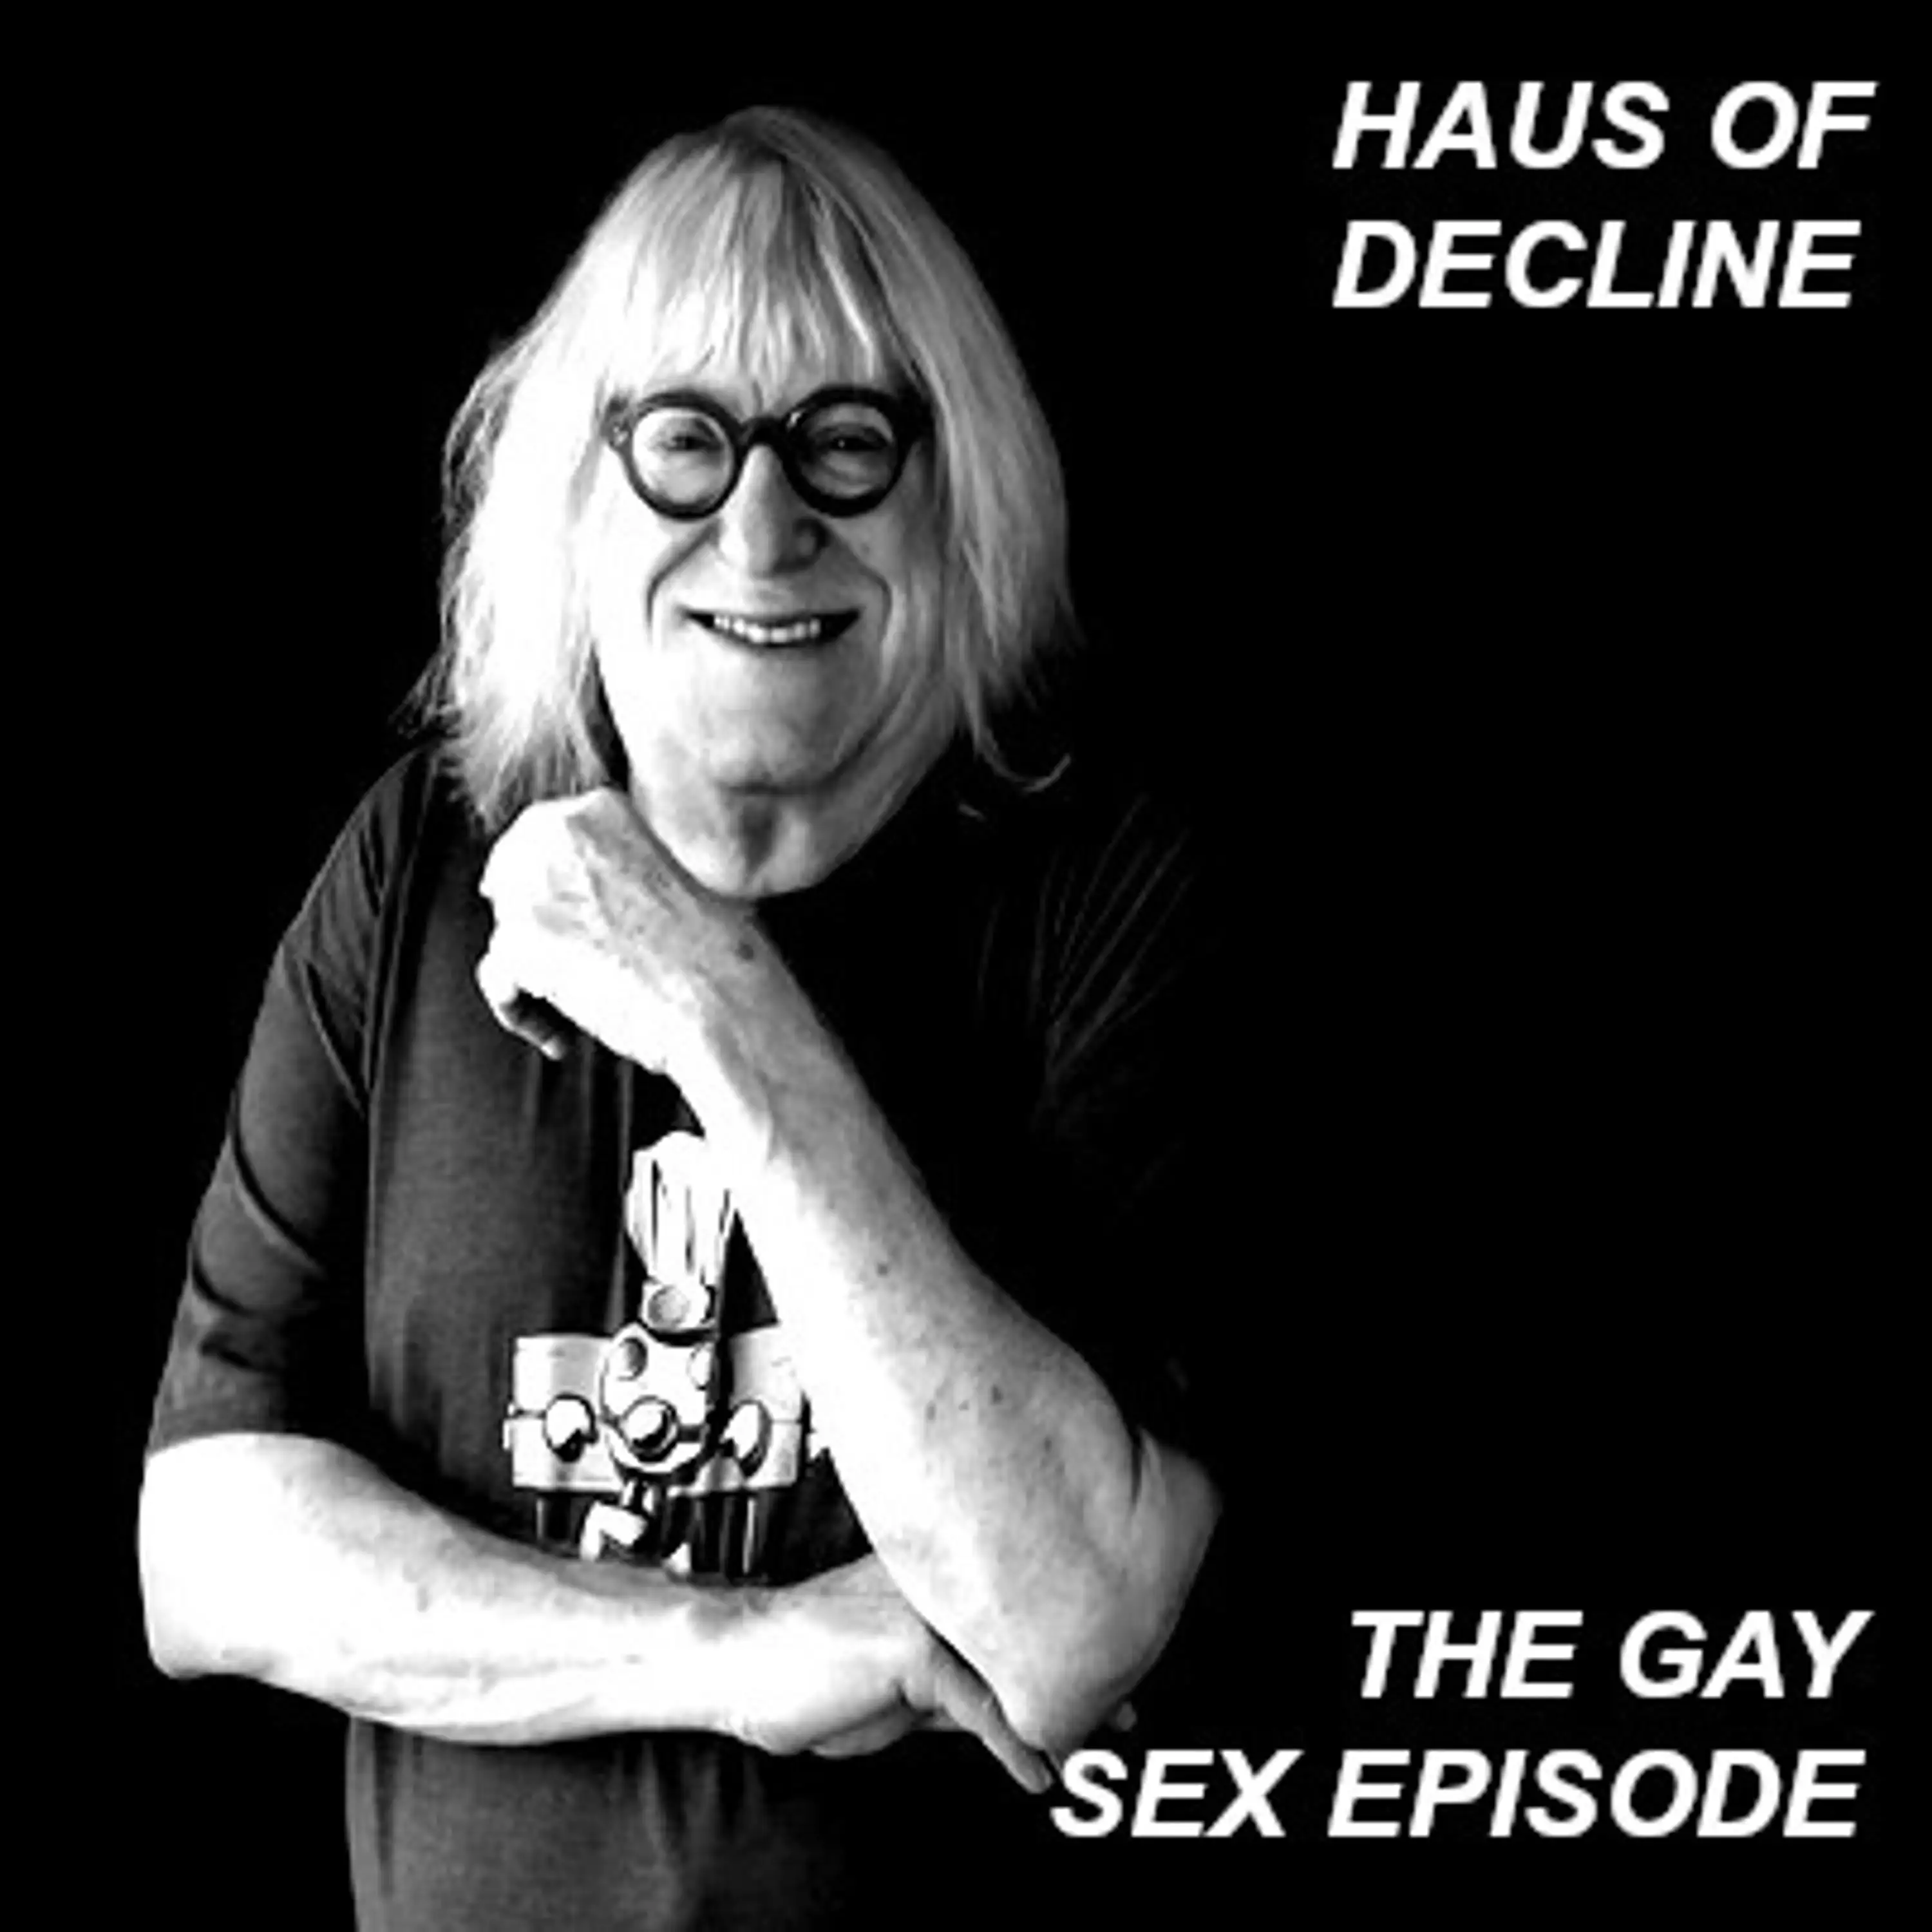 The Gay Sex Episode